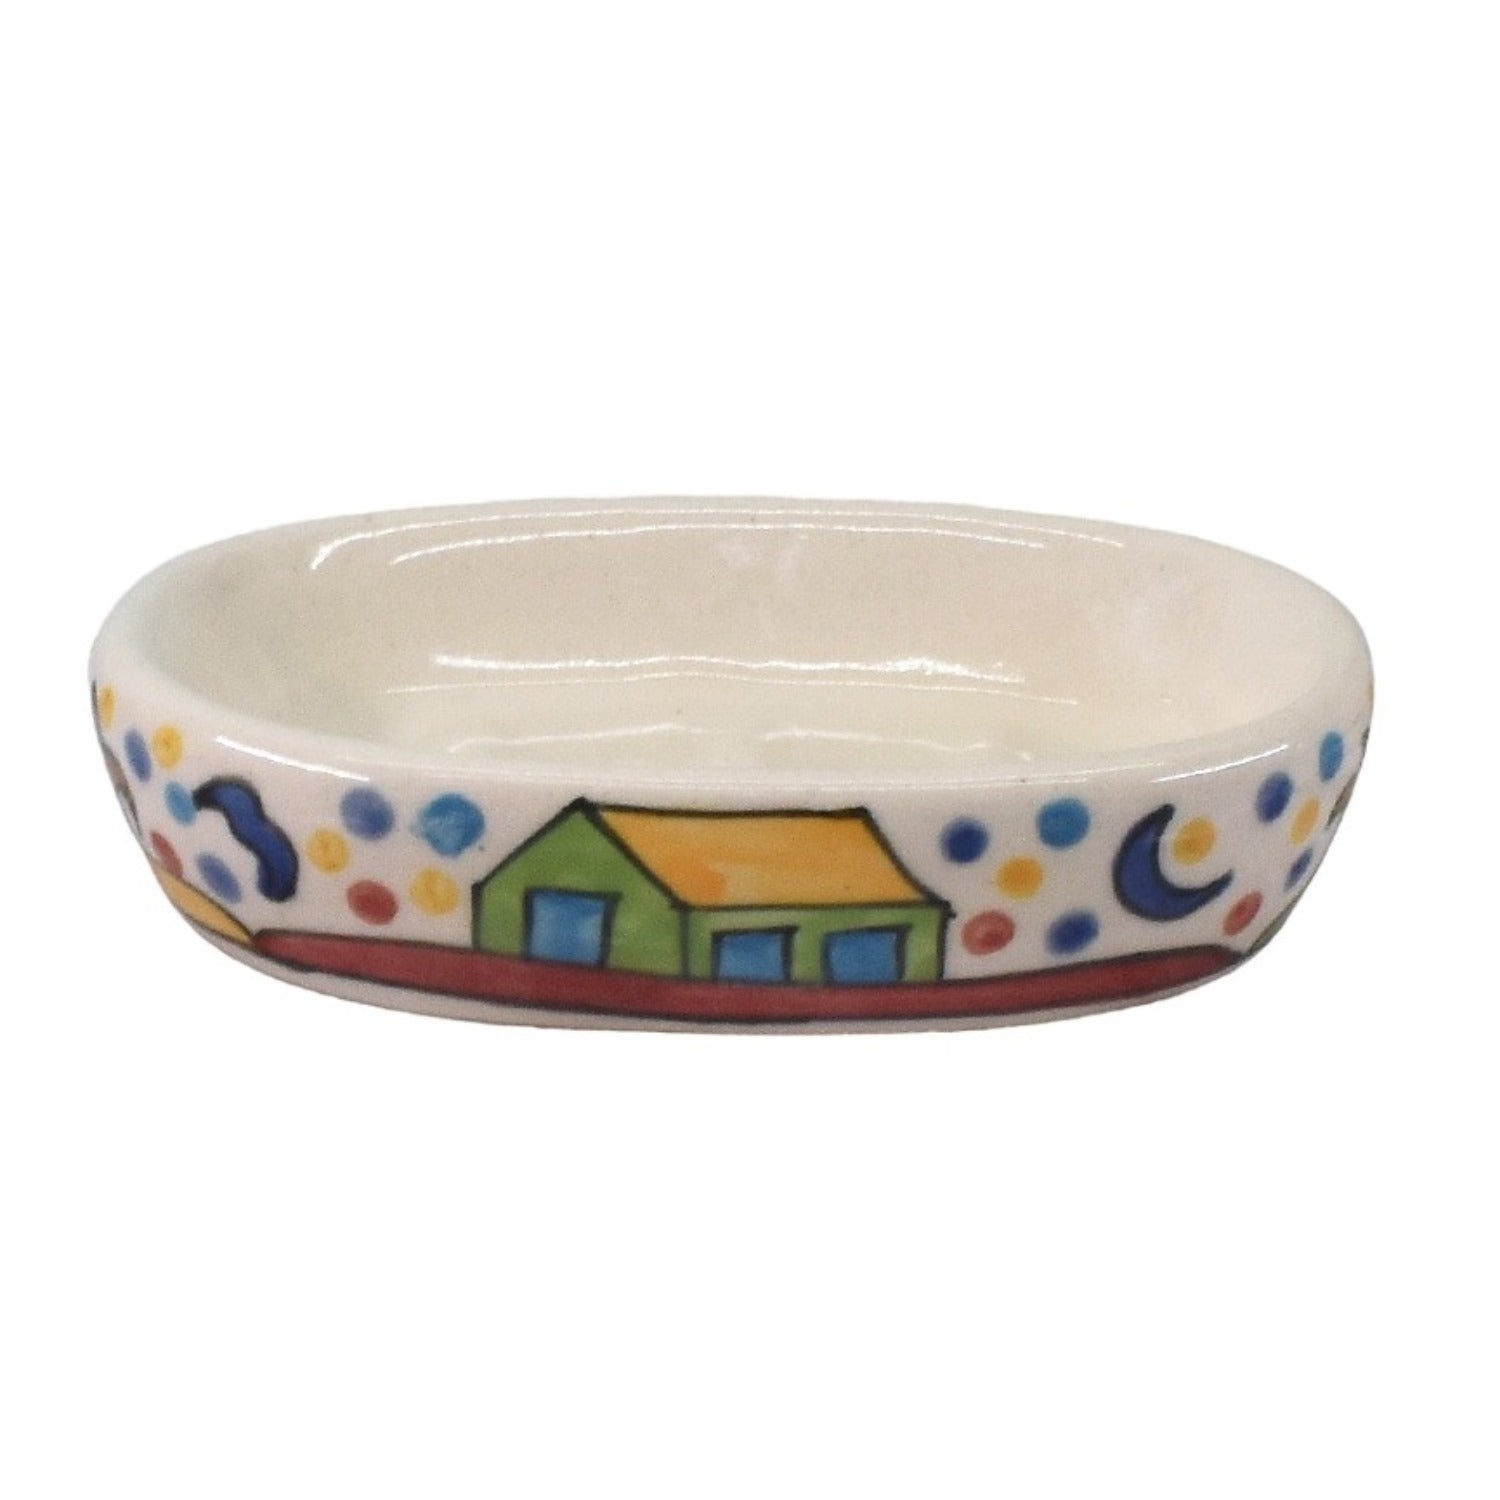 Ceramic Soap Dish Set of 1 Bathroom Accessories for Home (C1011)